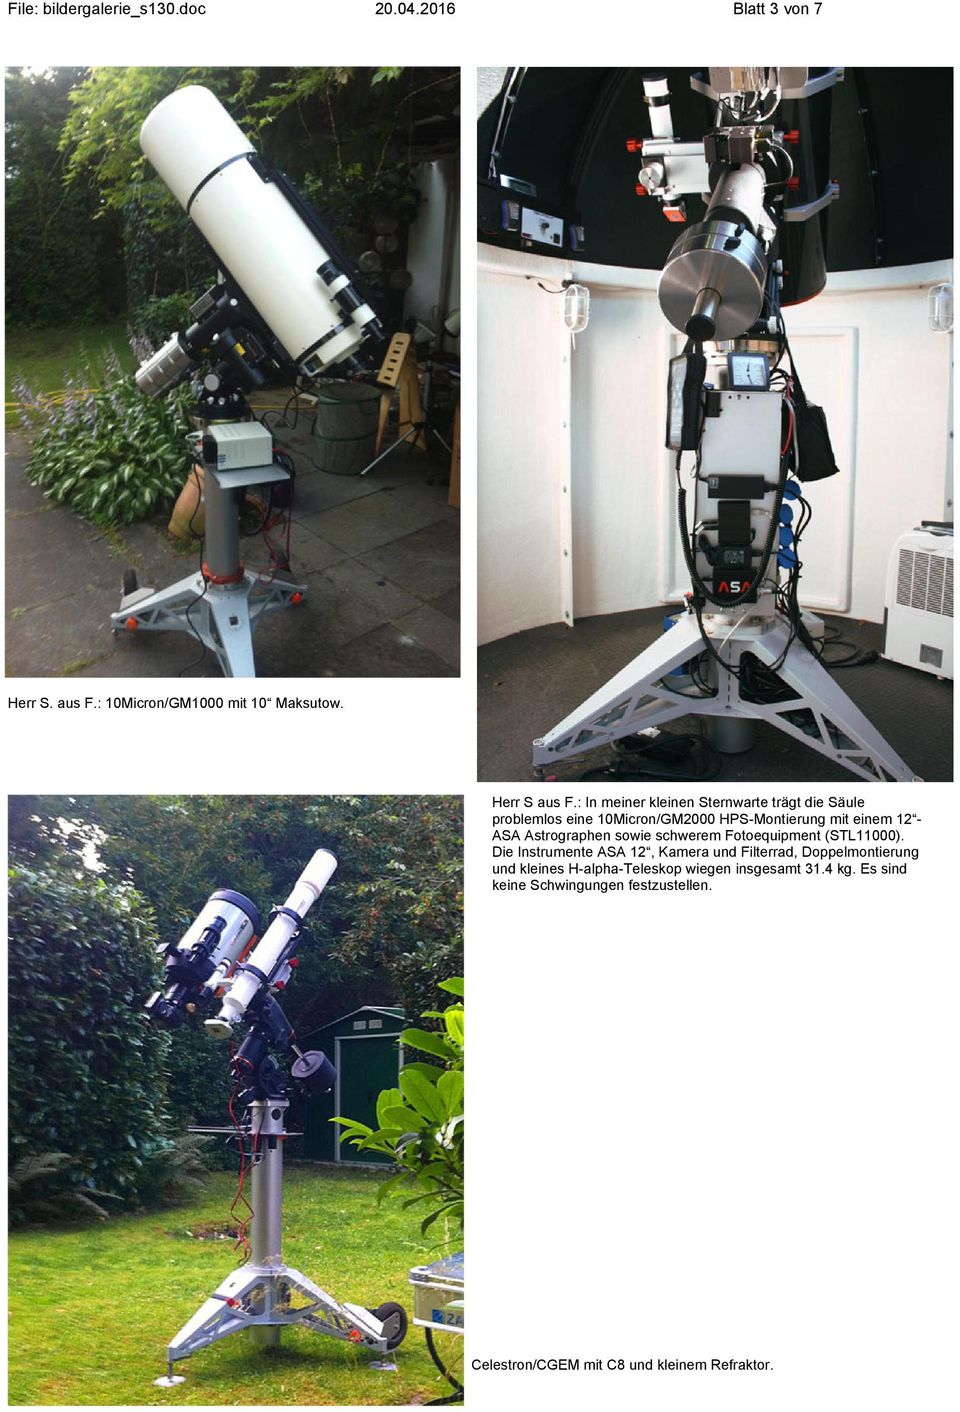 Astrographen sowie schwerem Fotoequipment (STL11000).